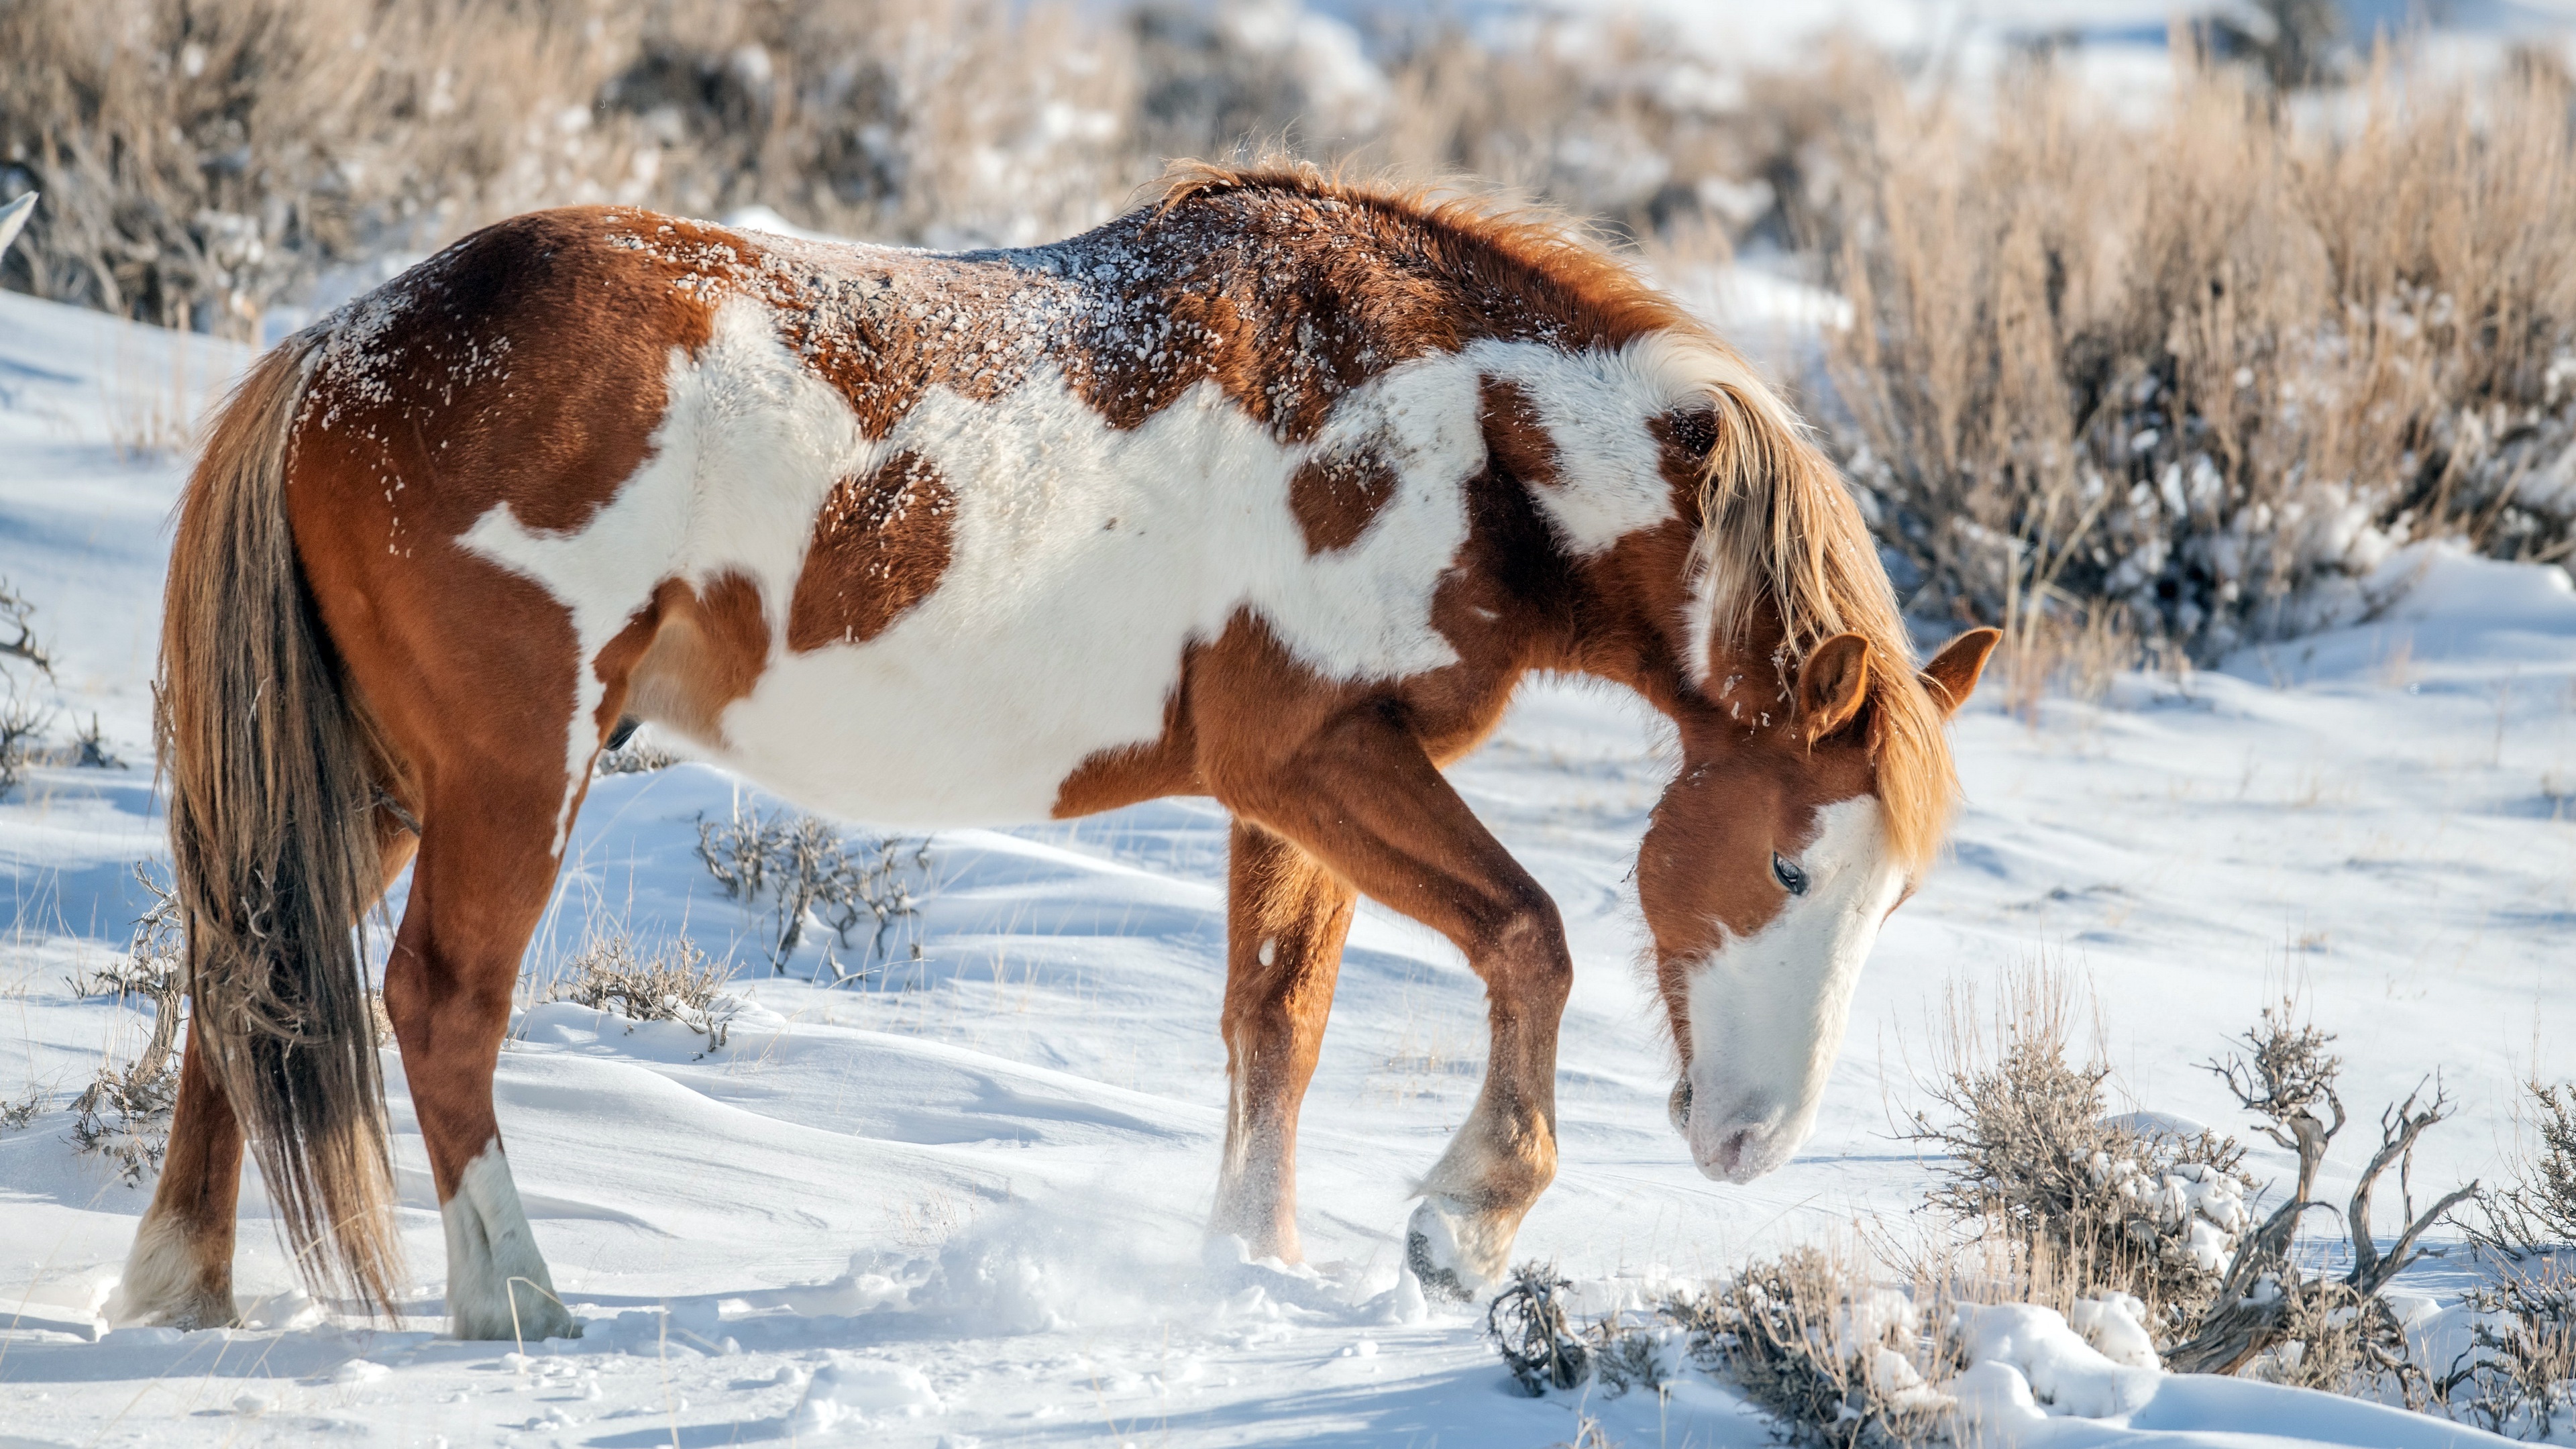 Horses in the Snow, Winter nature wallpaper, Majestic horse in snow, 3840x2160 4K Desktop